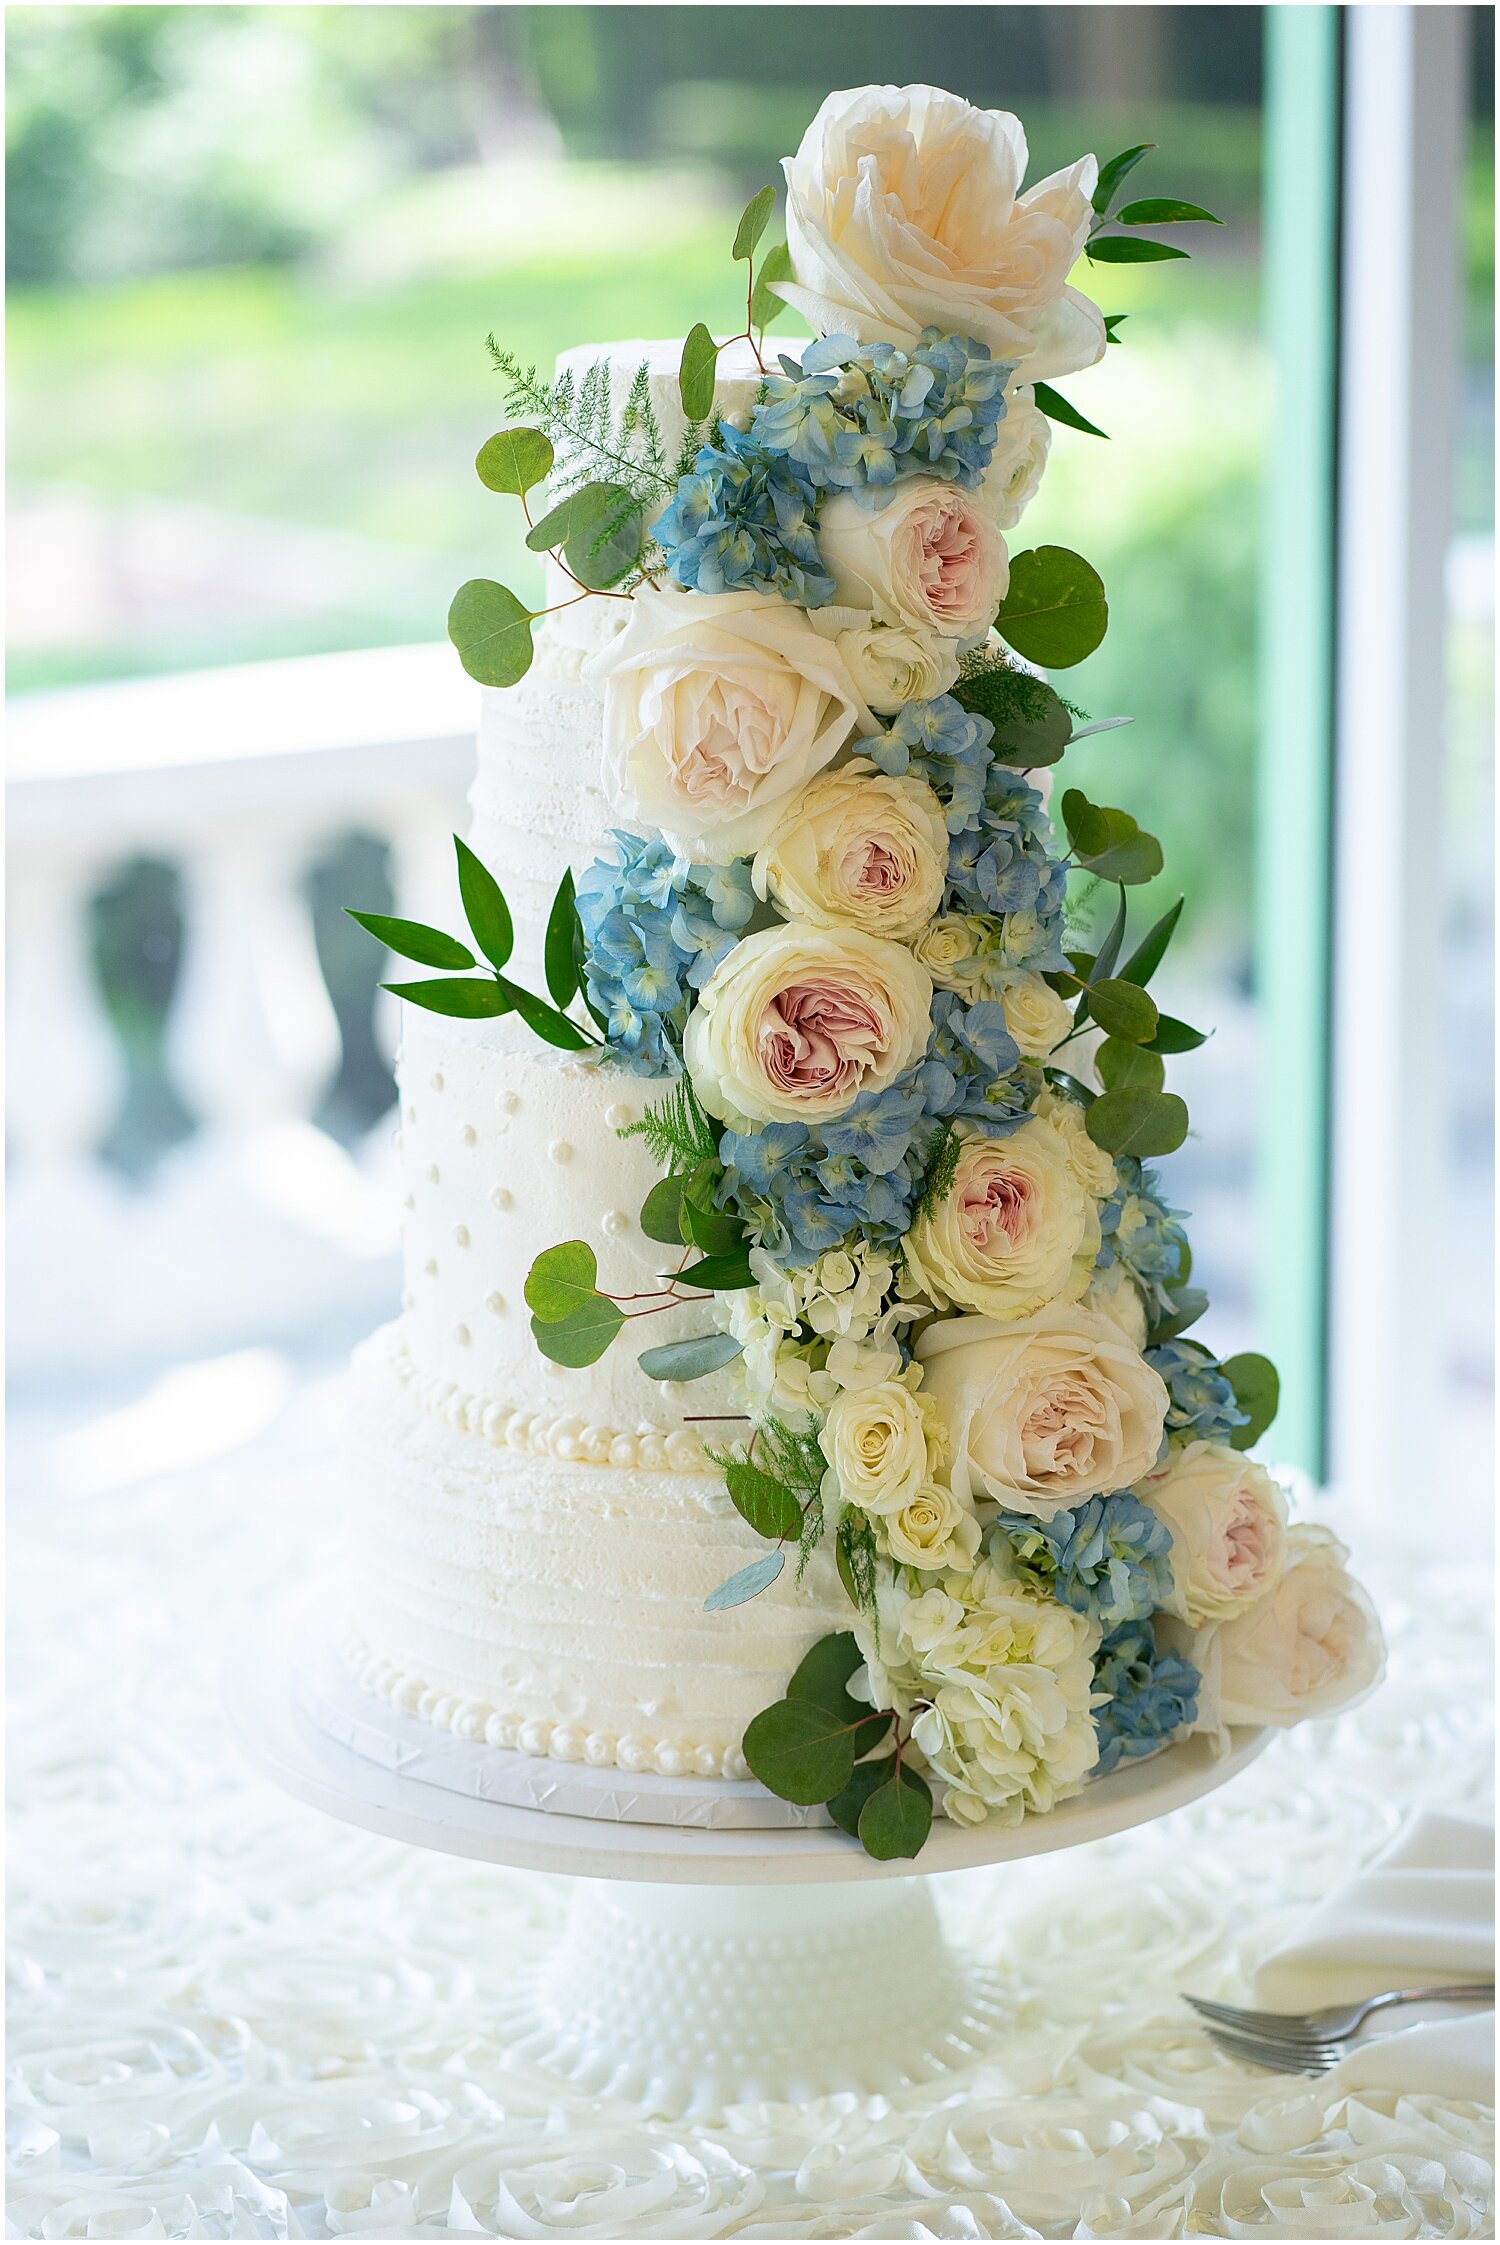  white wedding cake with flowers 